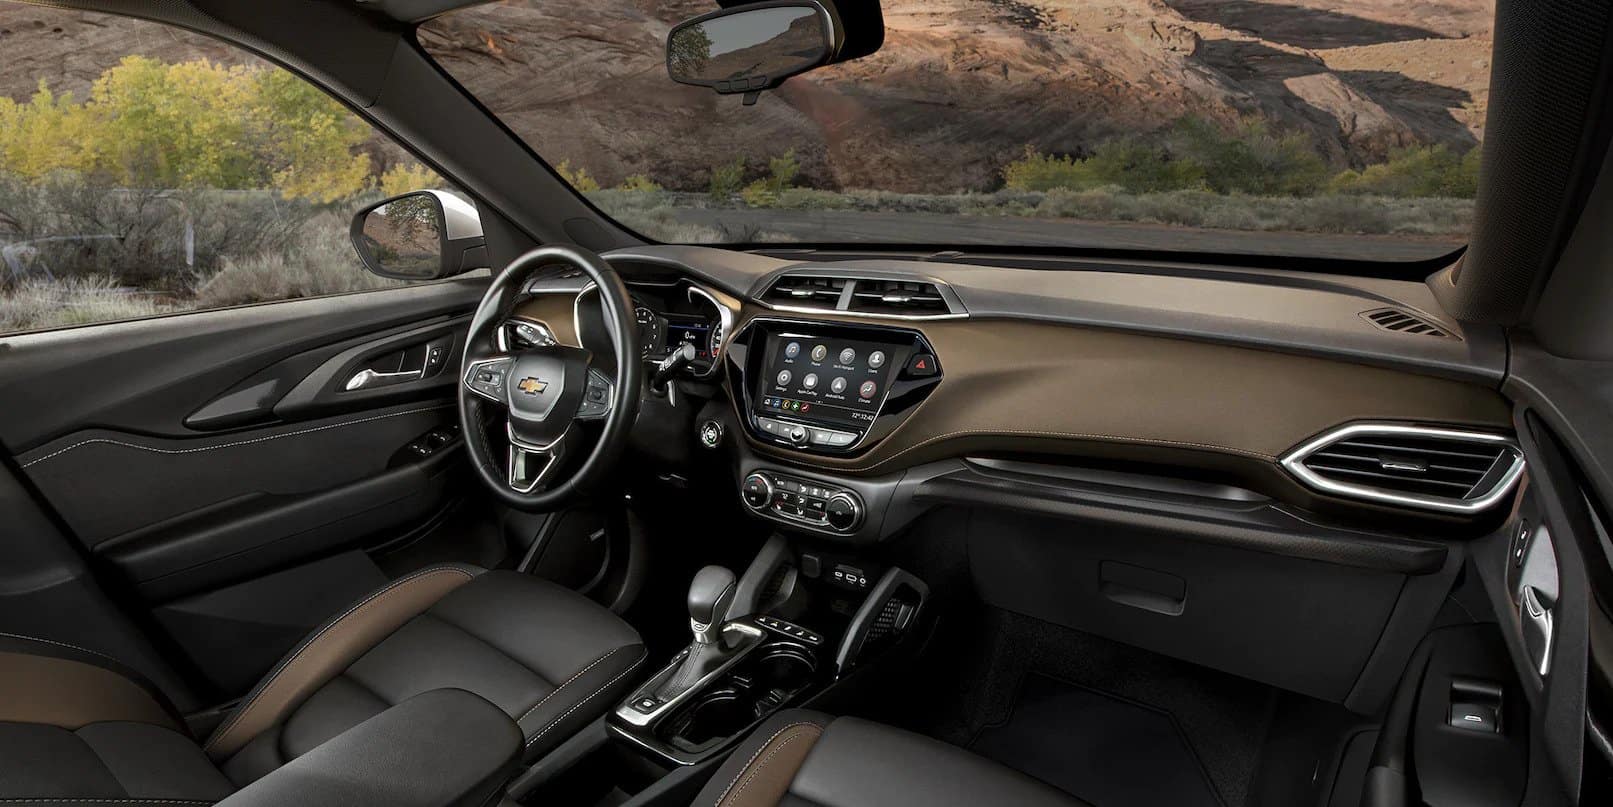 2022 Chevrolet Trailblazer Interior Dimensions & Features | Sawyer Chevrolet,  Inc.